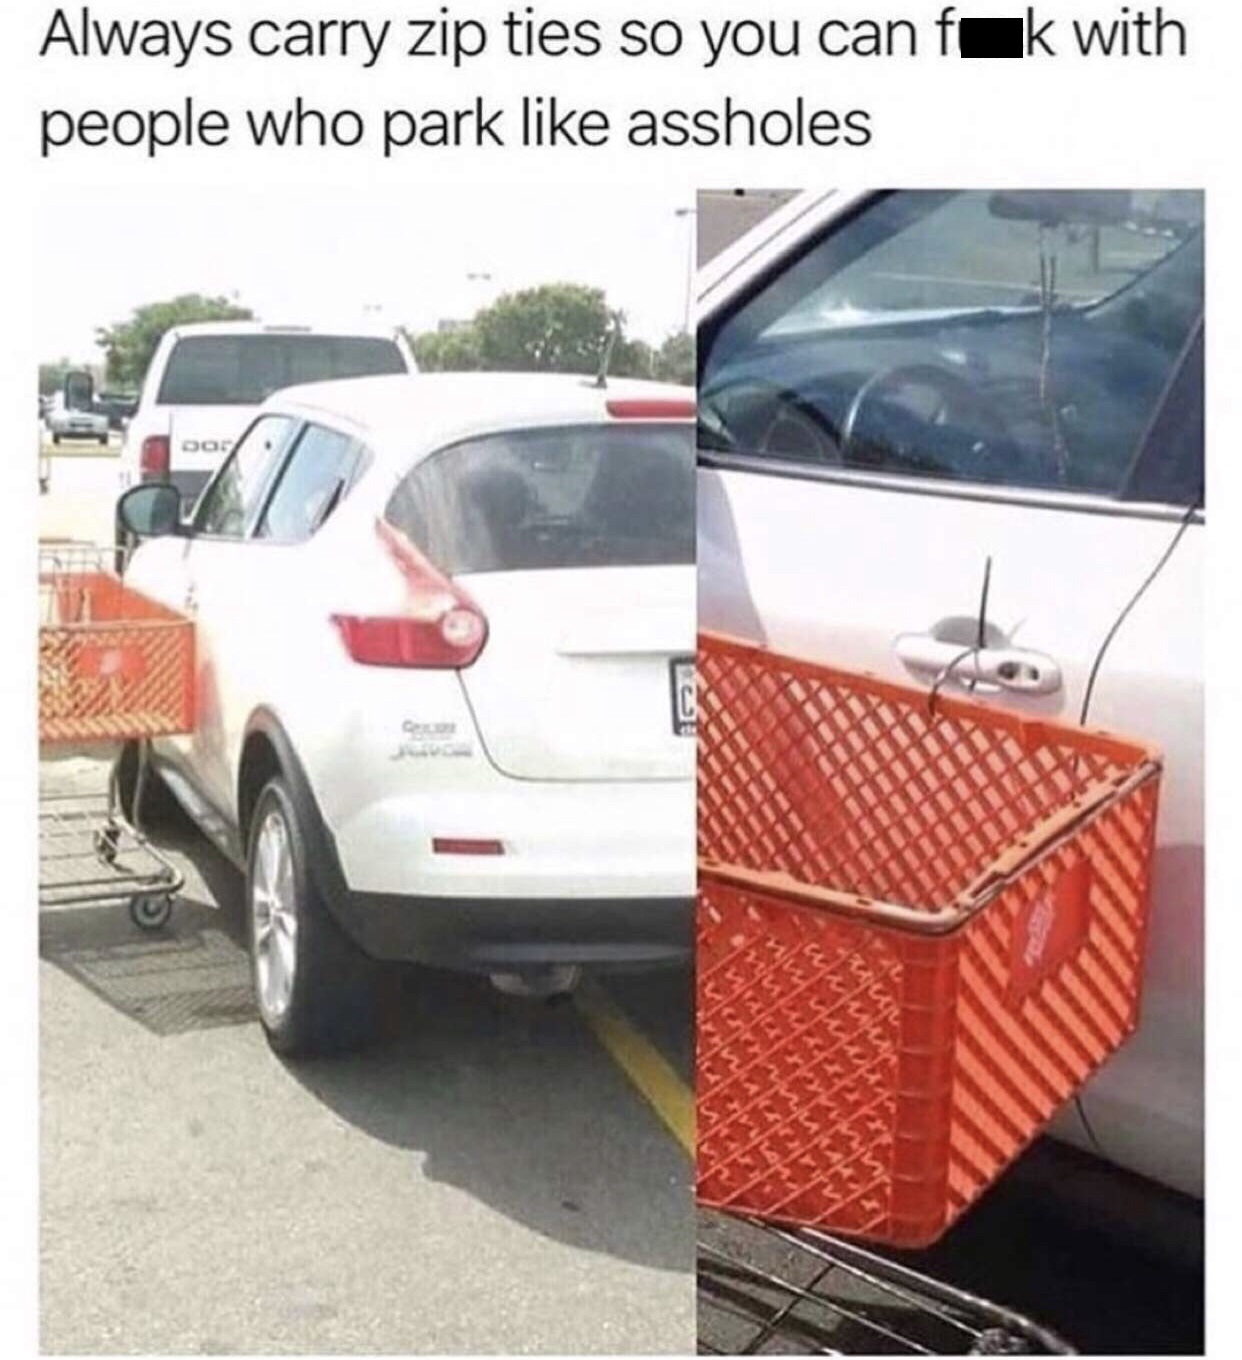 zip tie car prank - Always carry zip ties so you can fik with people who park assholes